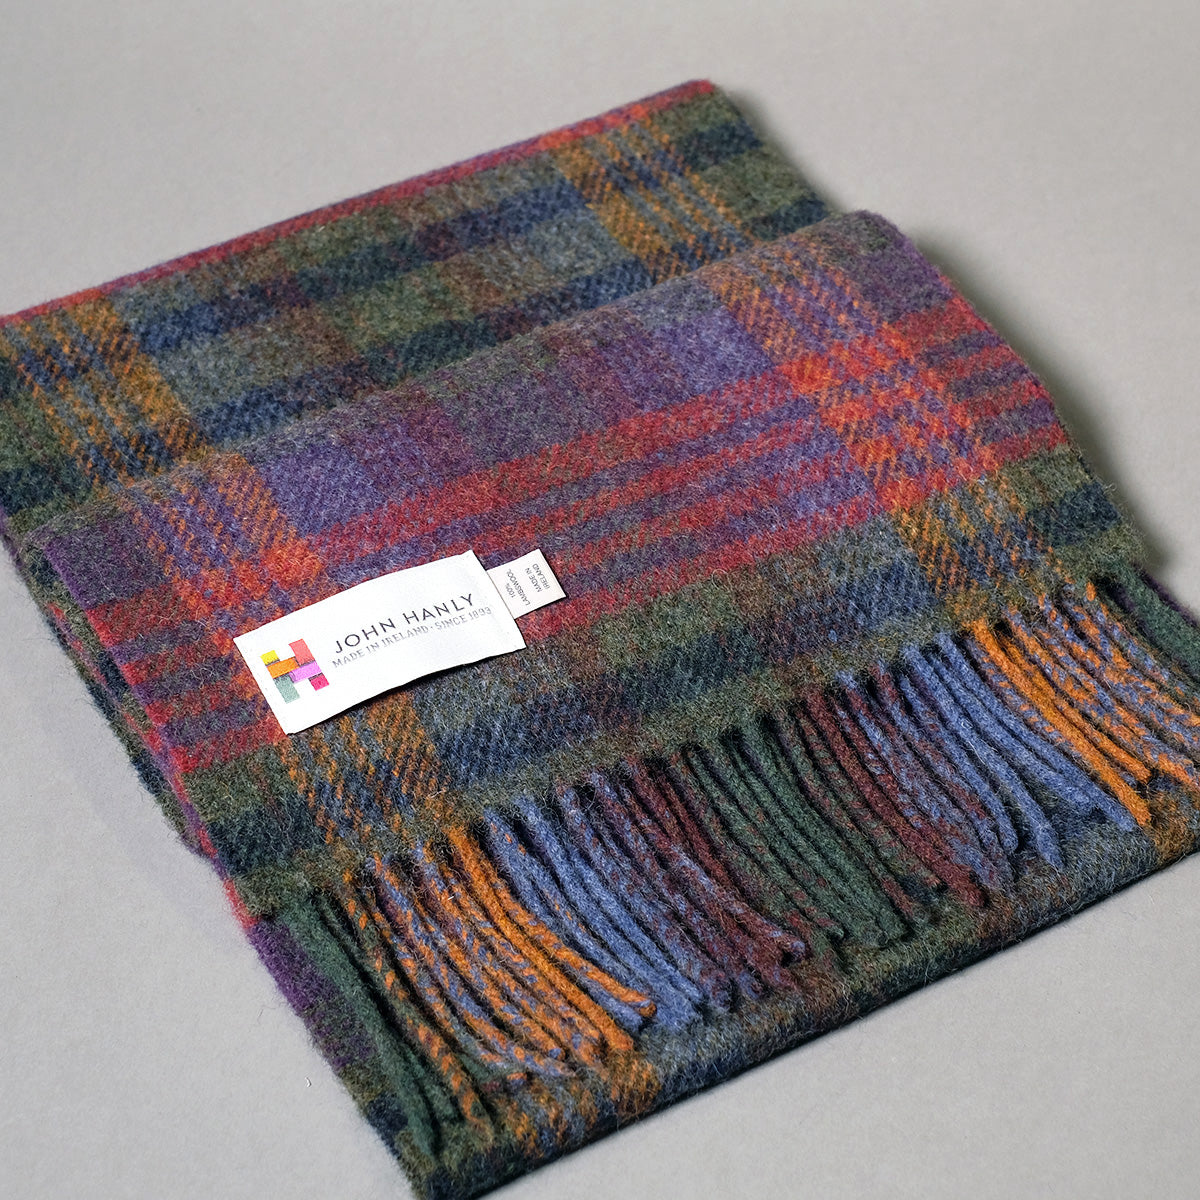 Red / Purple / Gold / Maroon Plaid Irish Wool Scarf by John Hanly —  Highlands Card & Gift